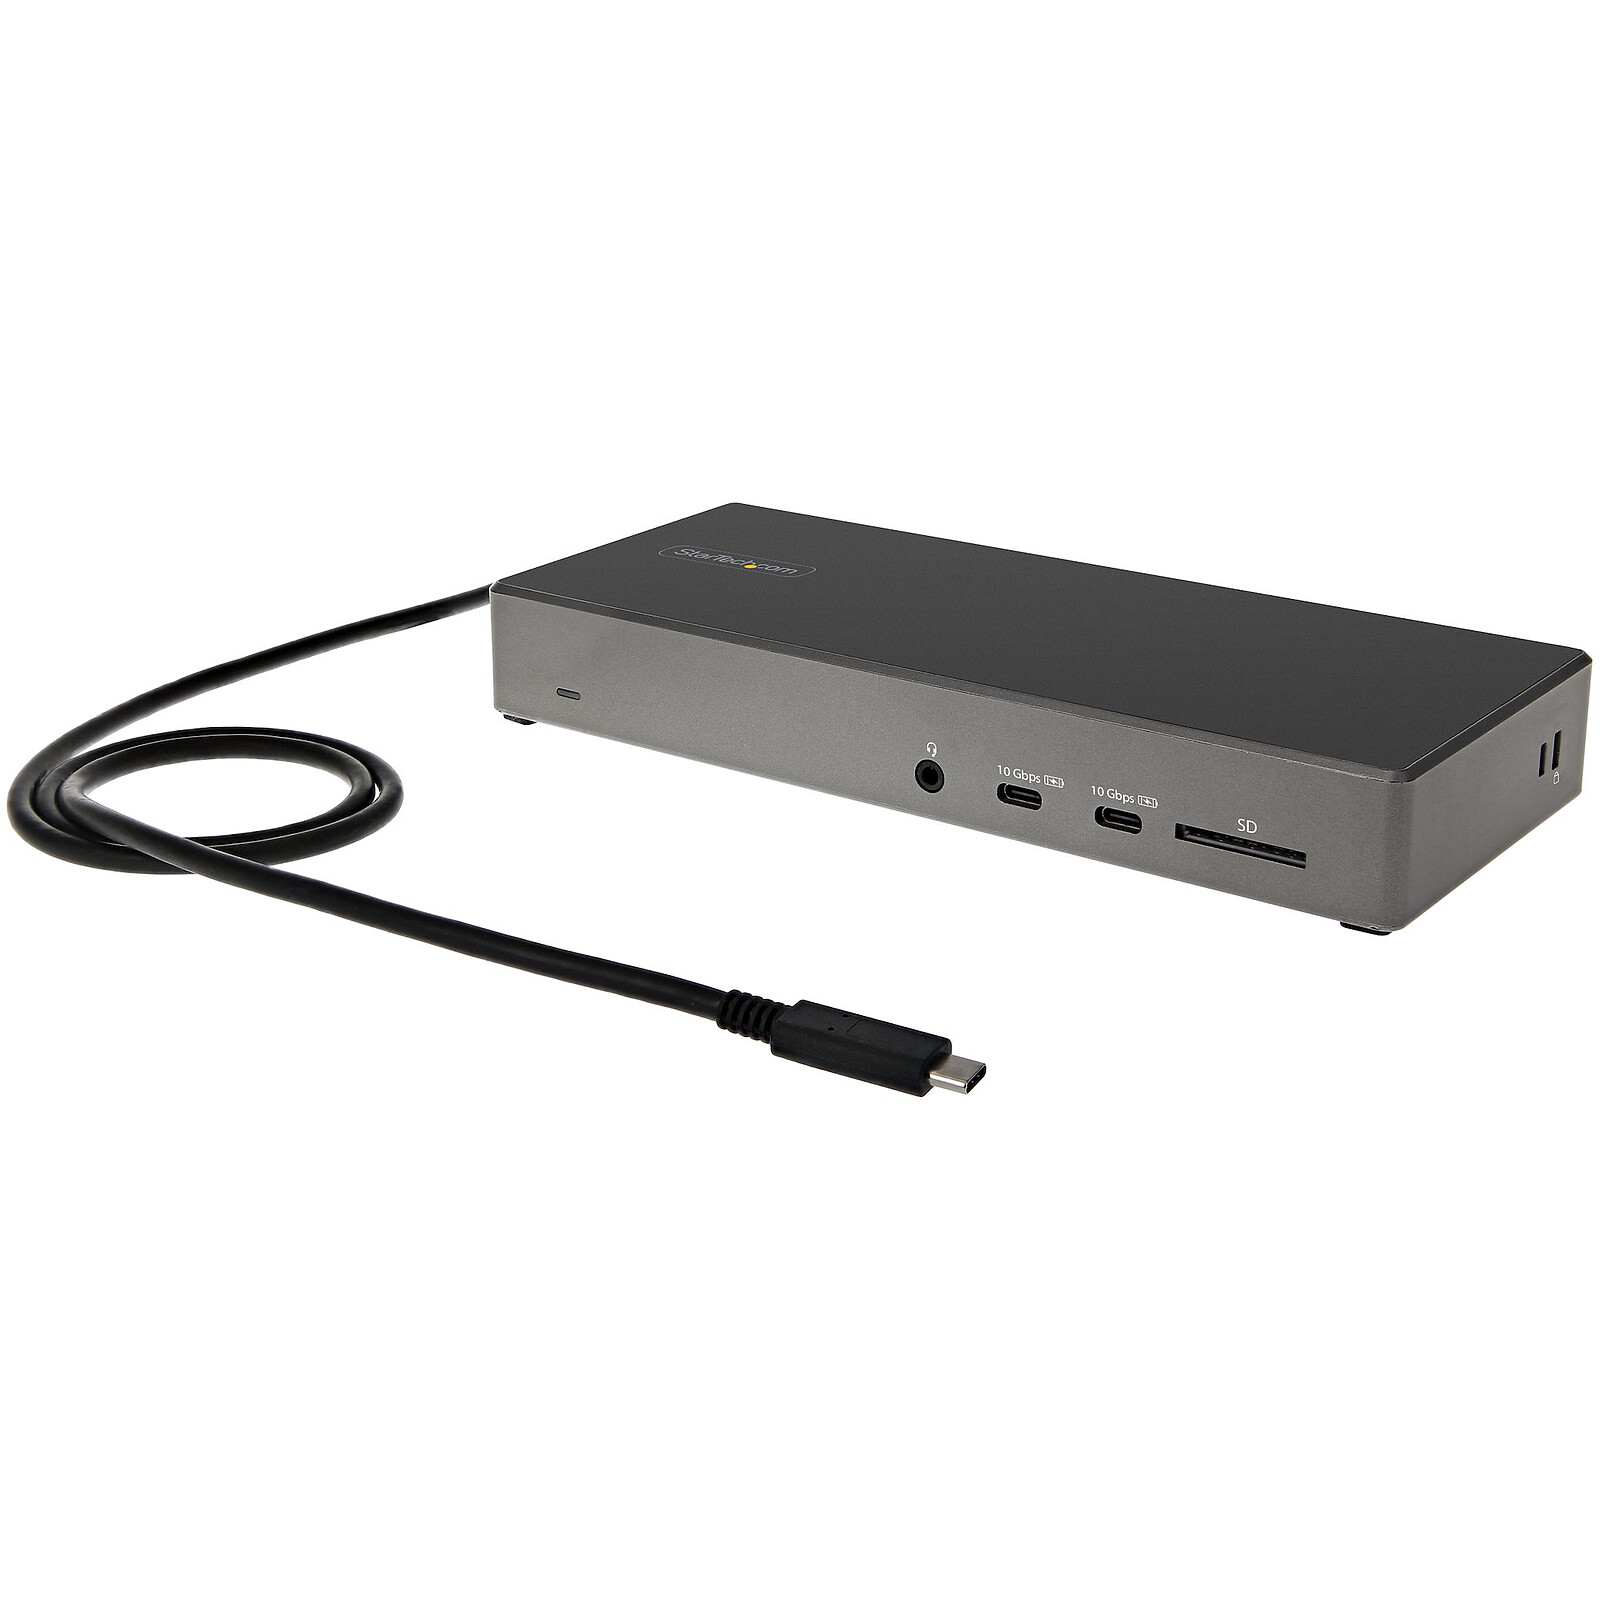 Razer USB C Dock - 11-Port Docking Station for Laptops and